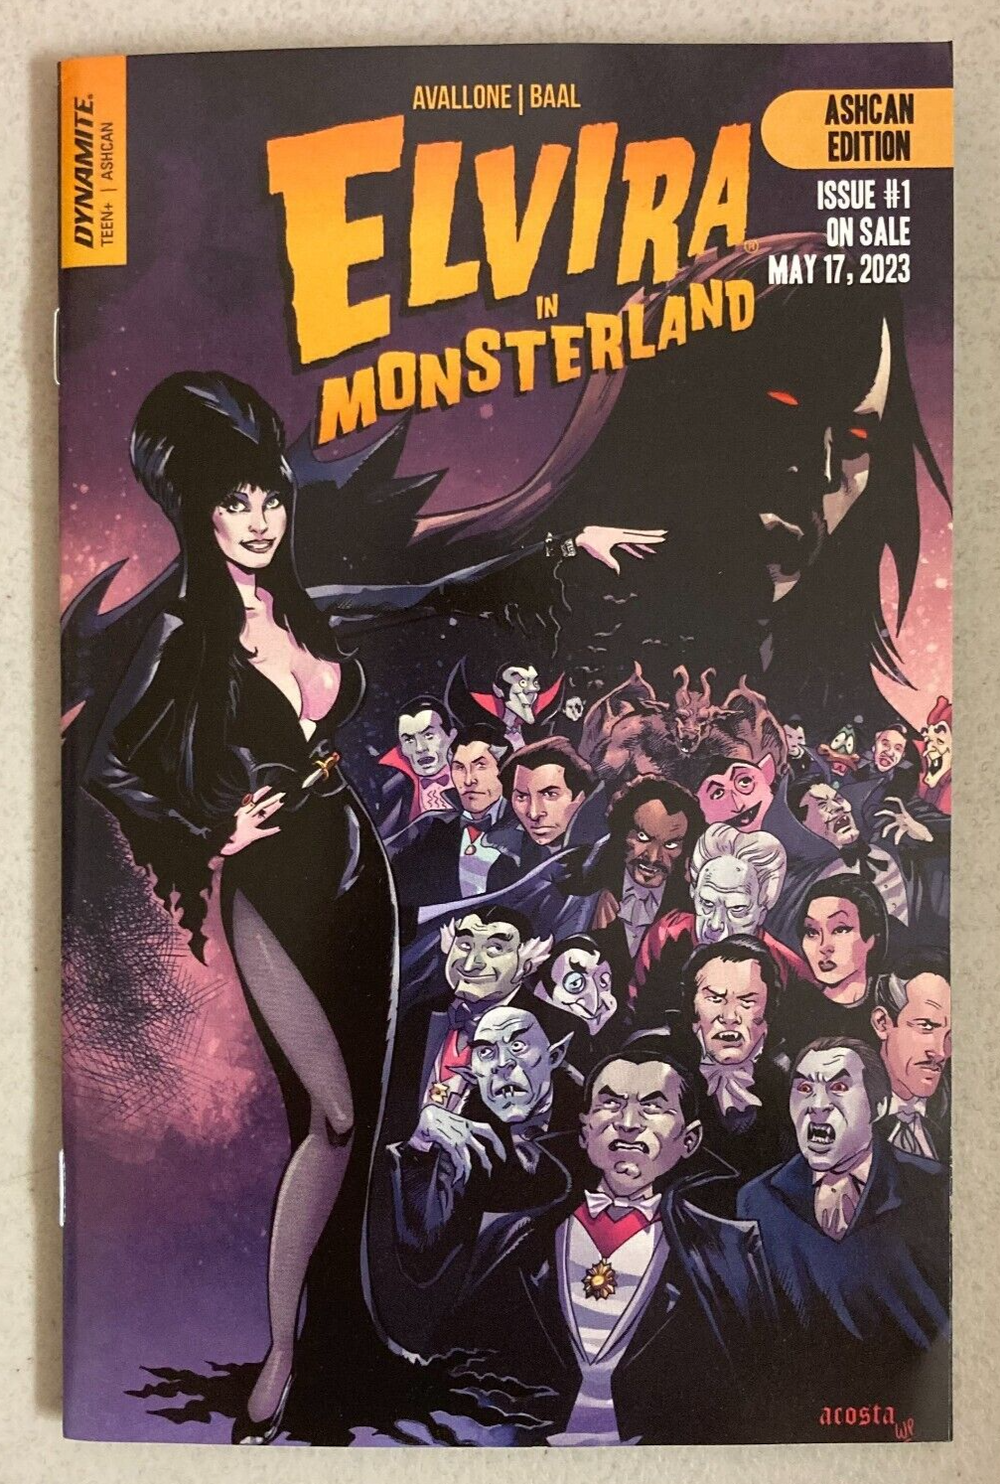 Elvira in Monsterland #1 - Ashcan Edition